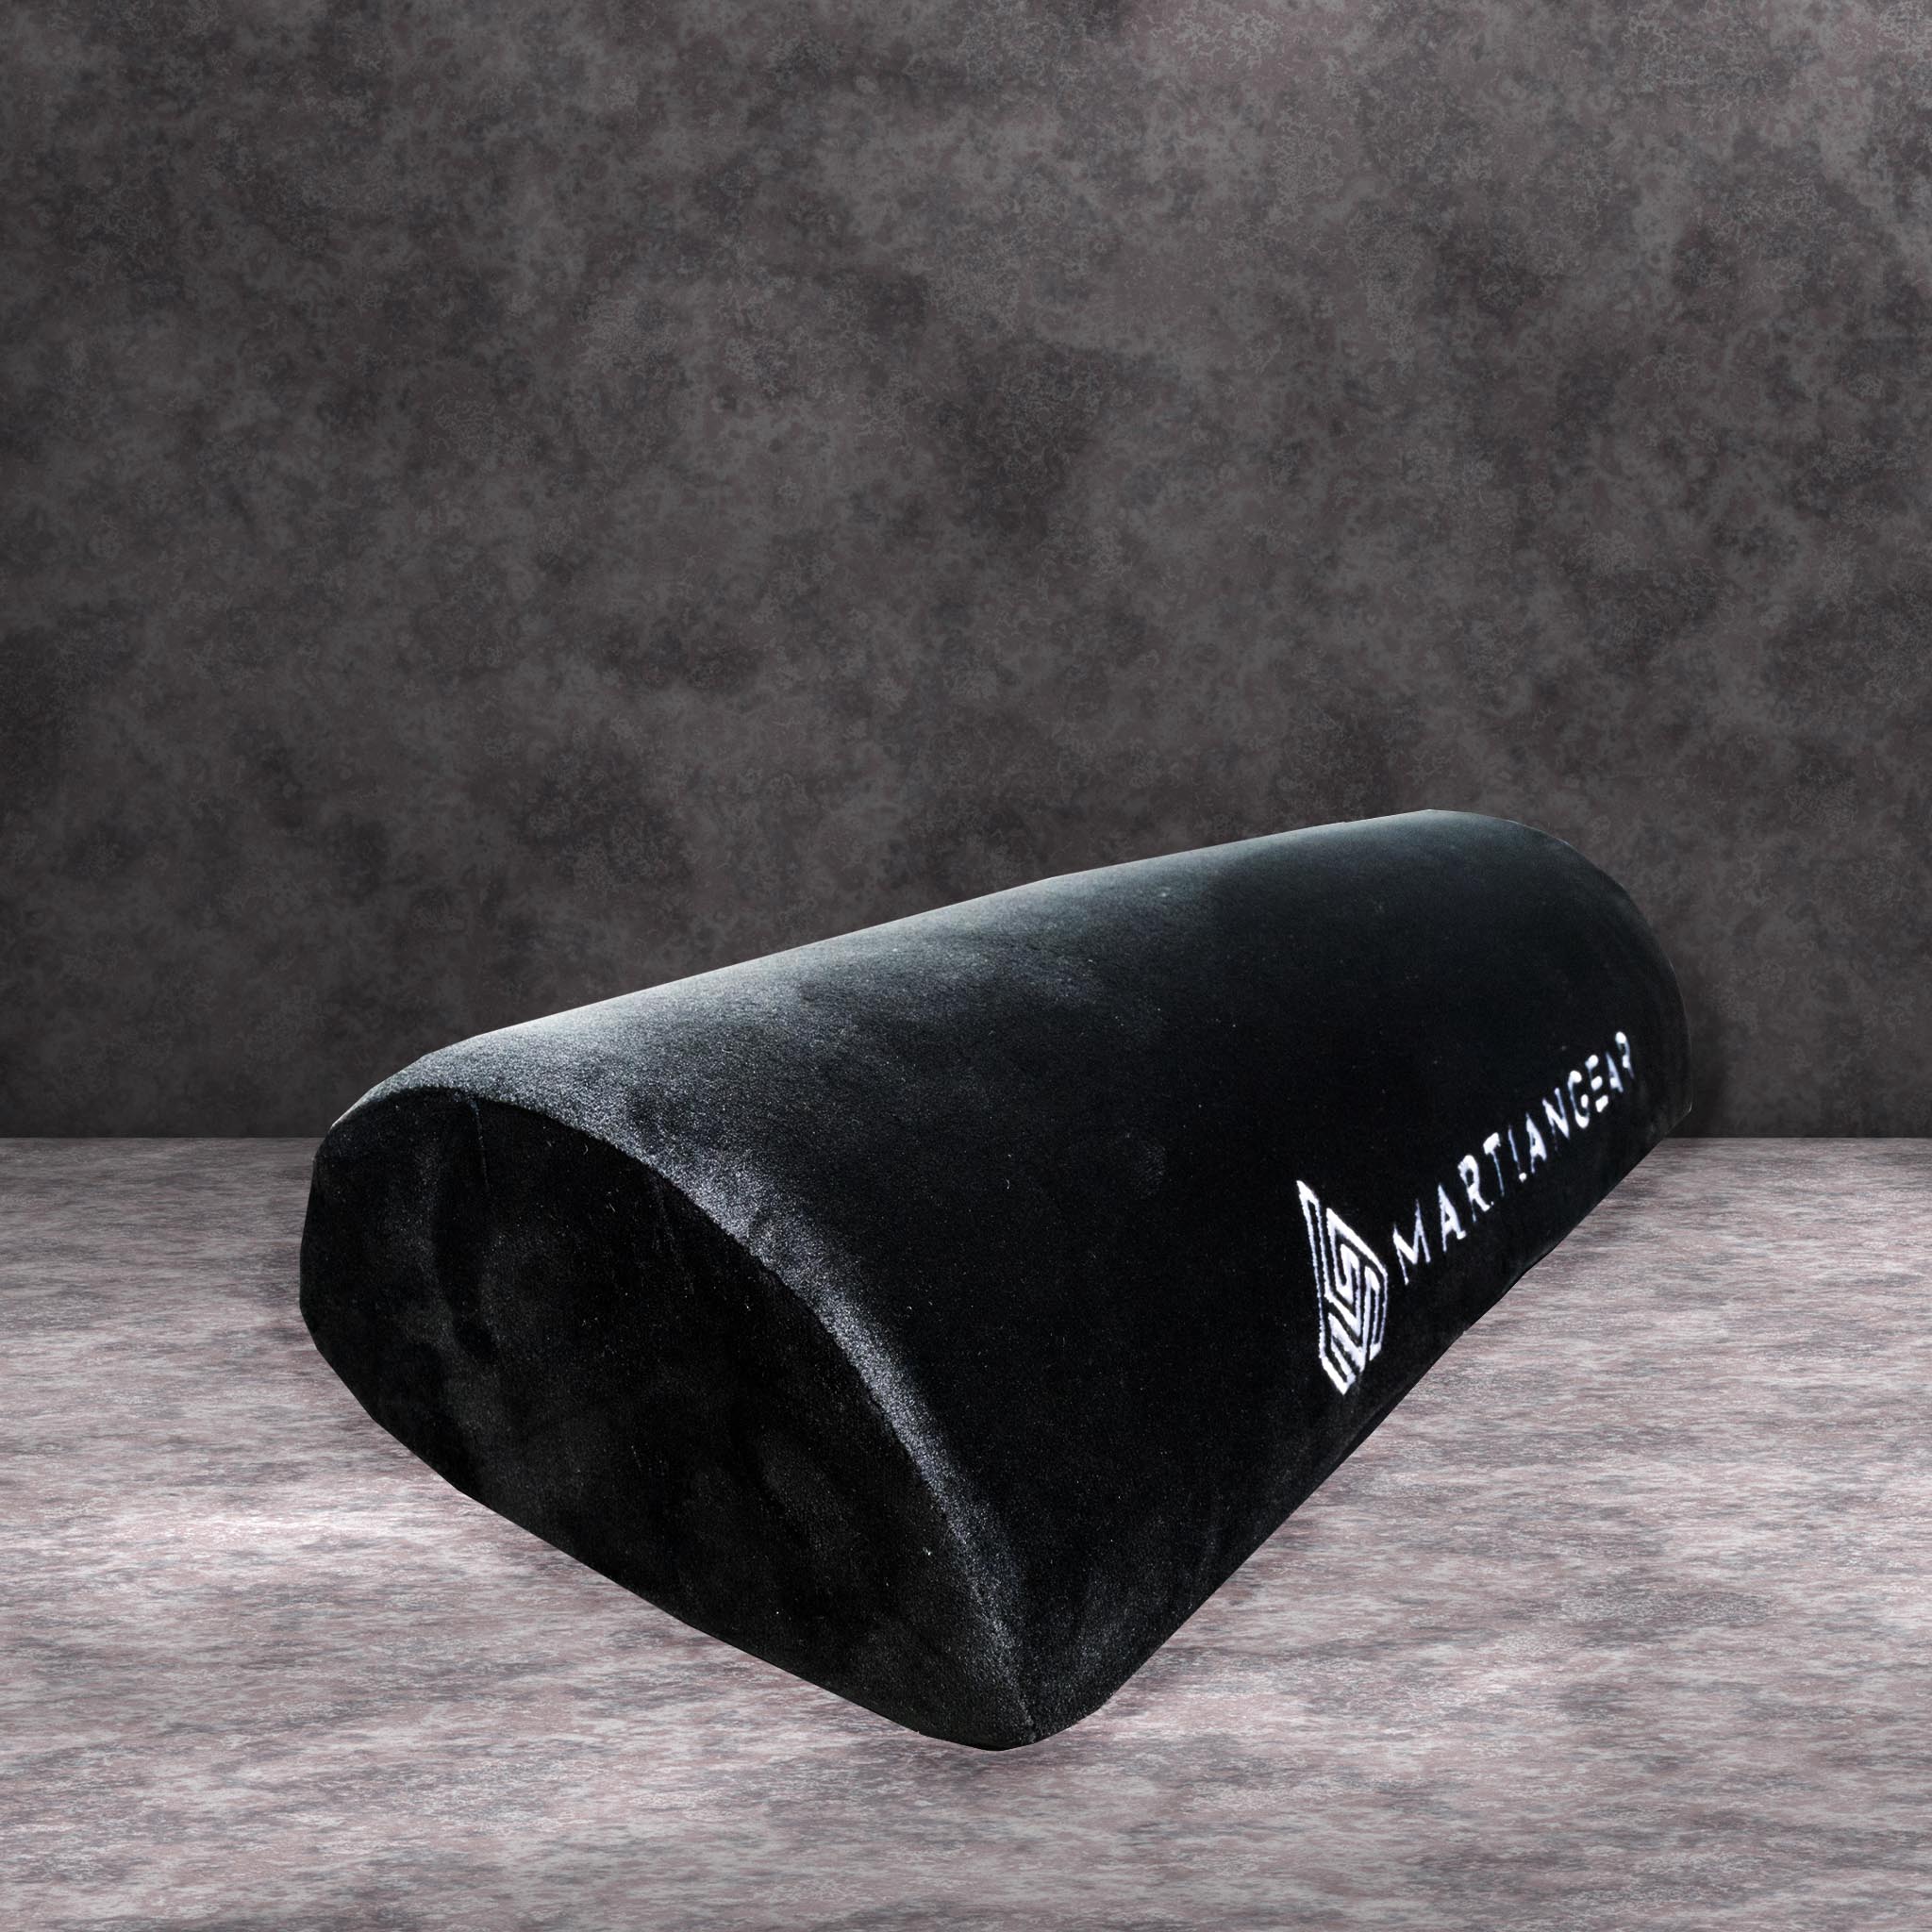 Martiangear Extra Comfort Foot Support Pillow